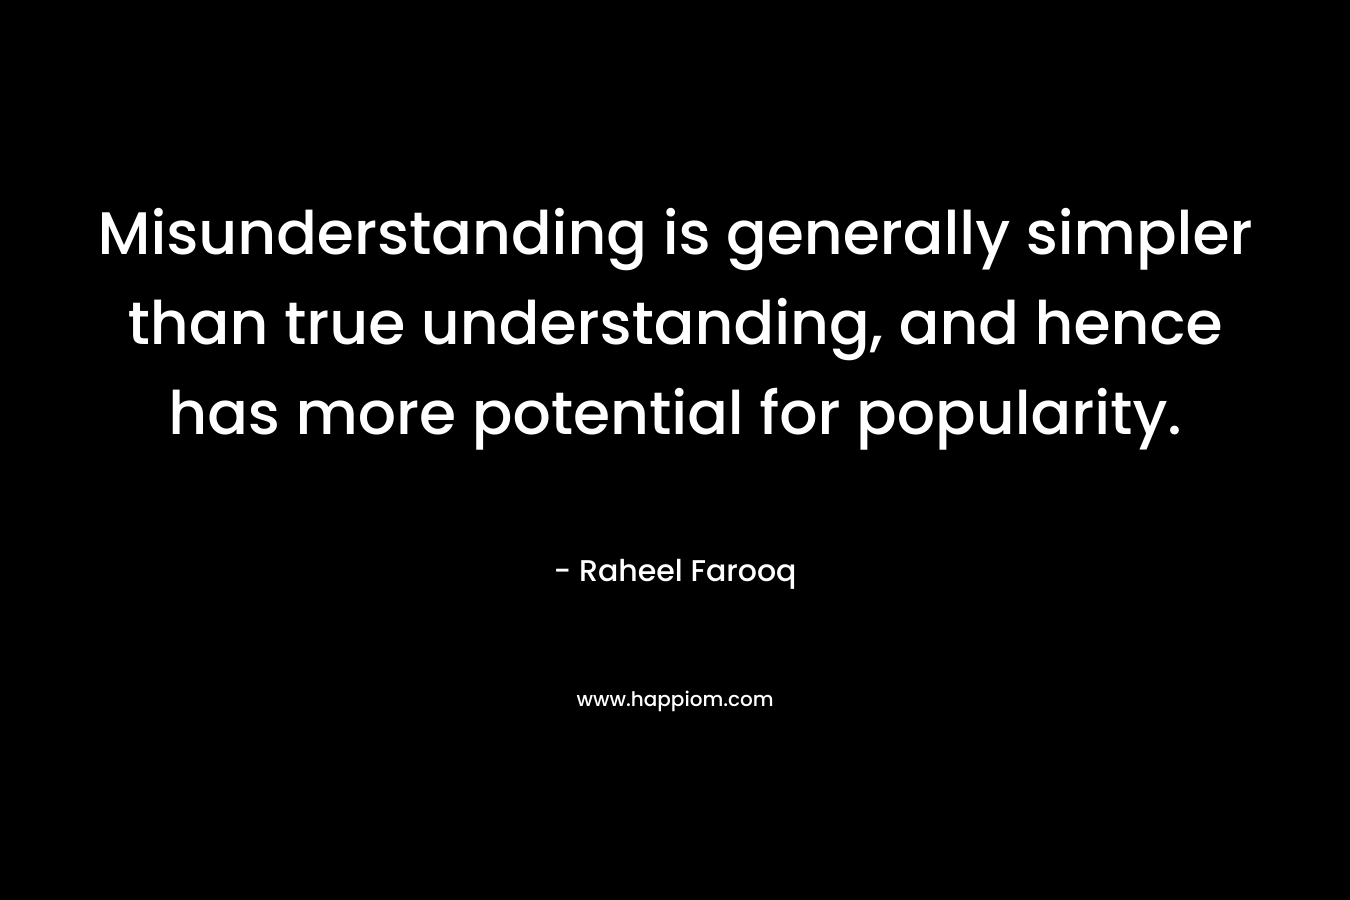 Misunderstanding is generally simpler than true understanding, and hence has more potential for popularity. – Raheel Farooq